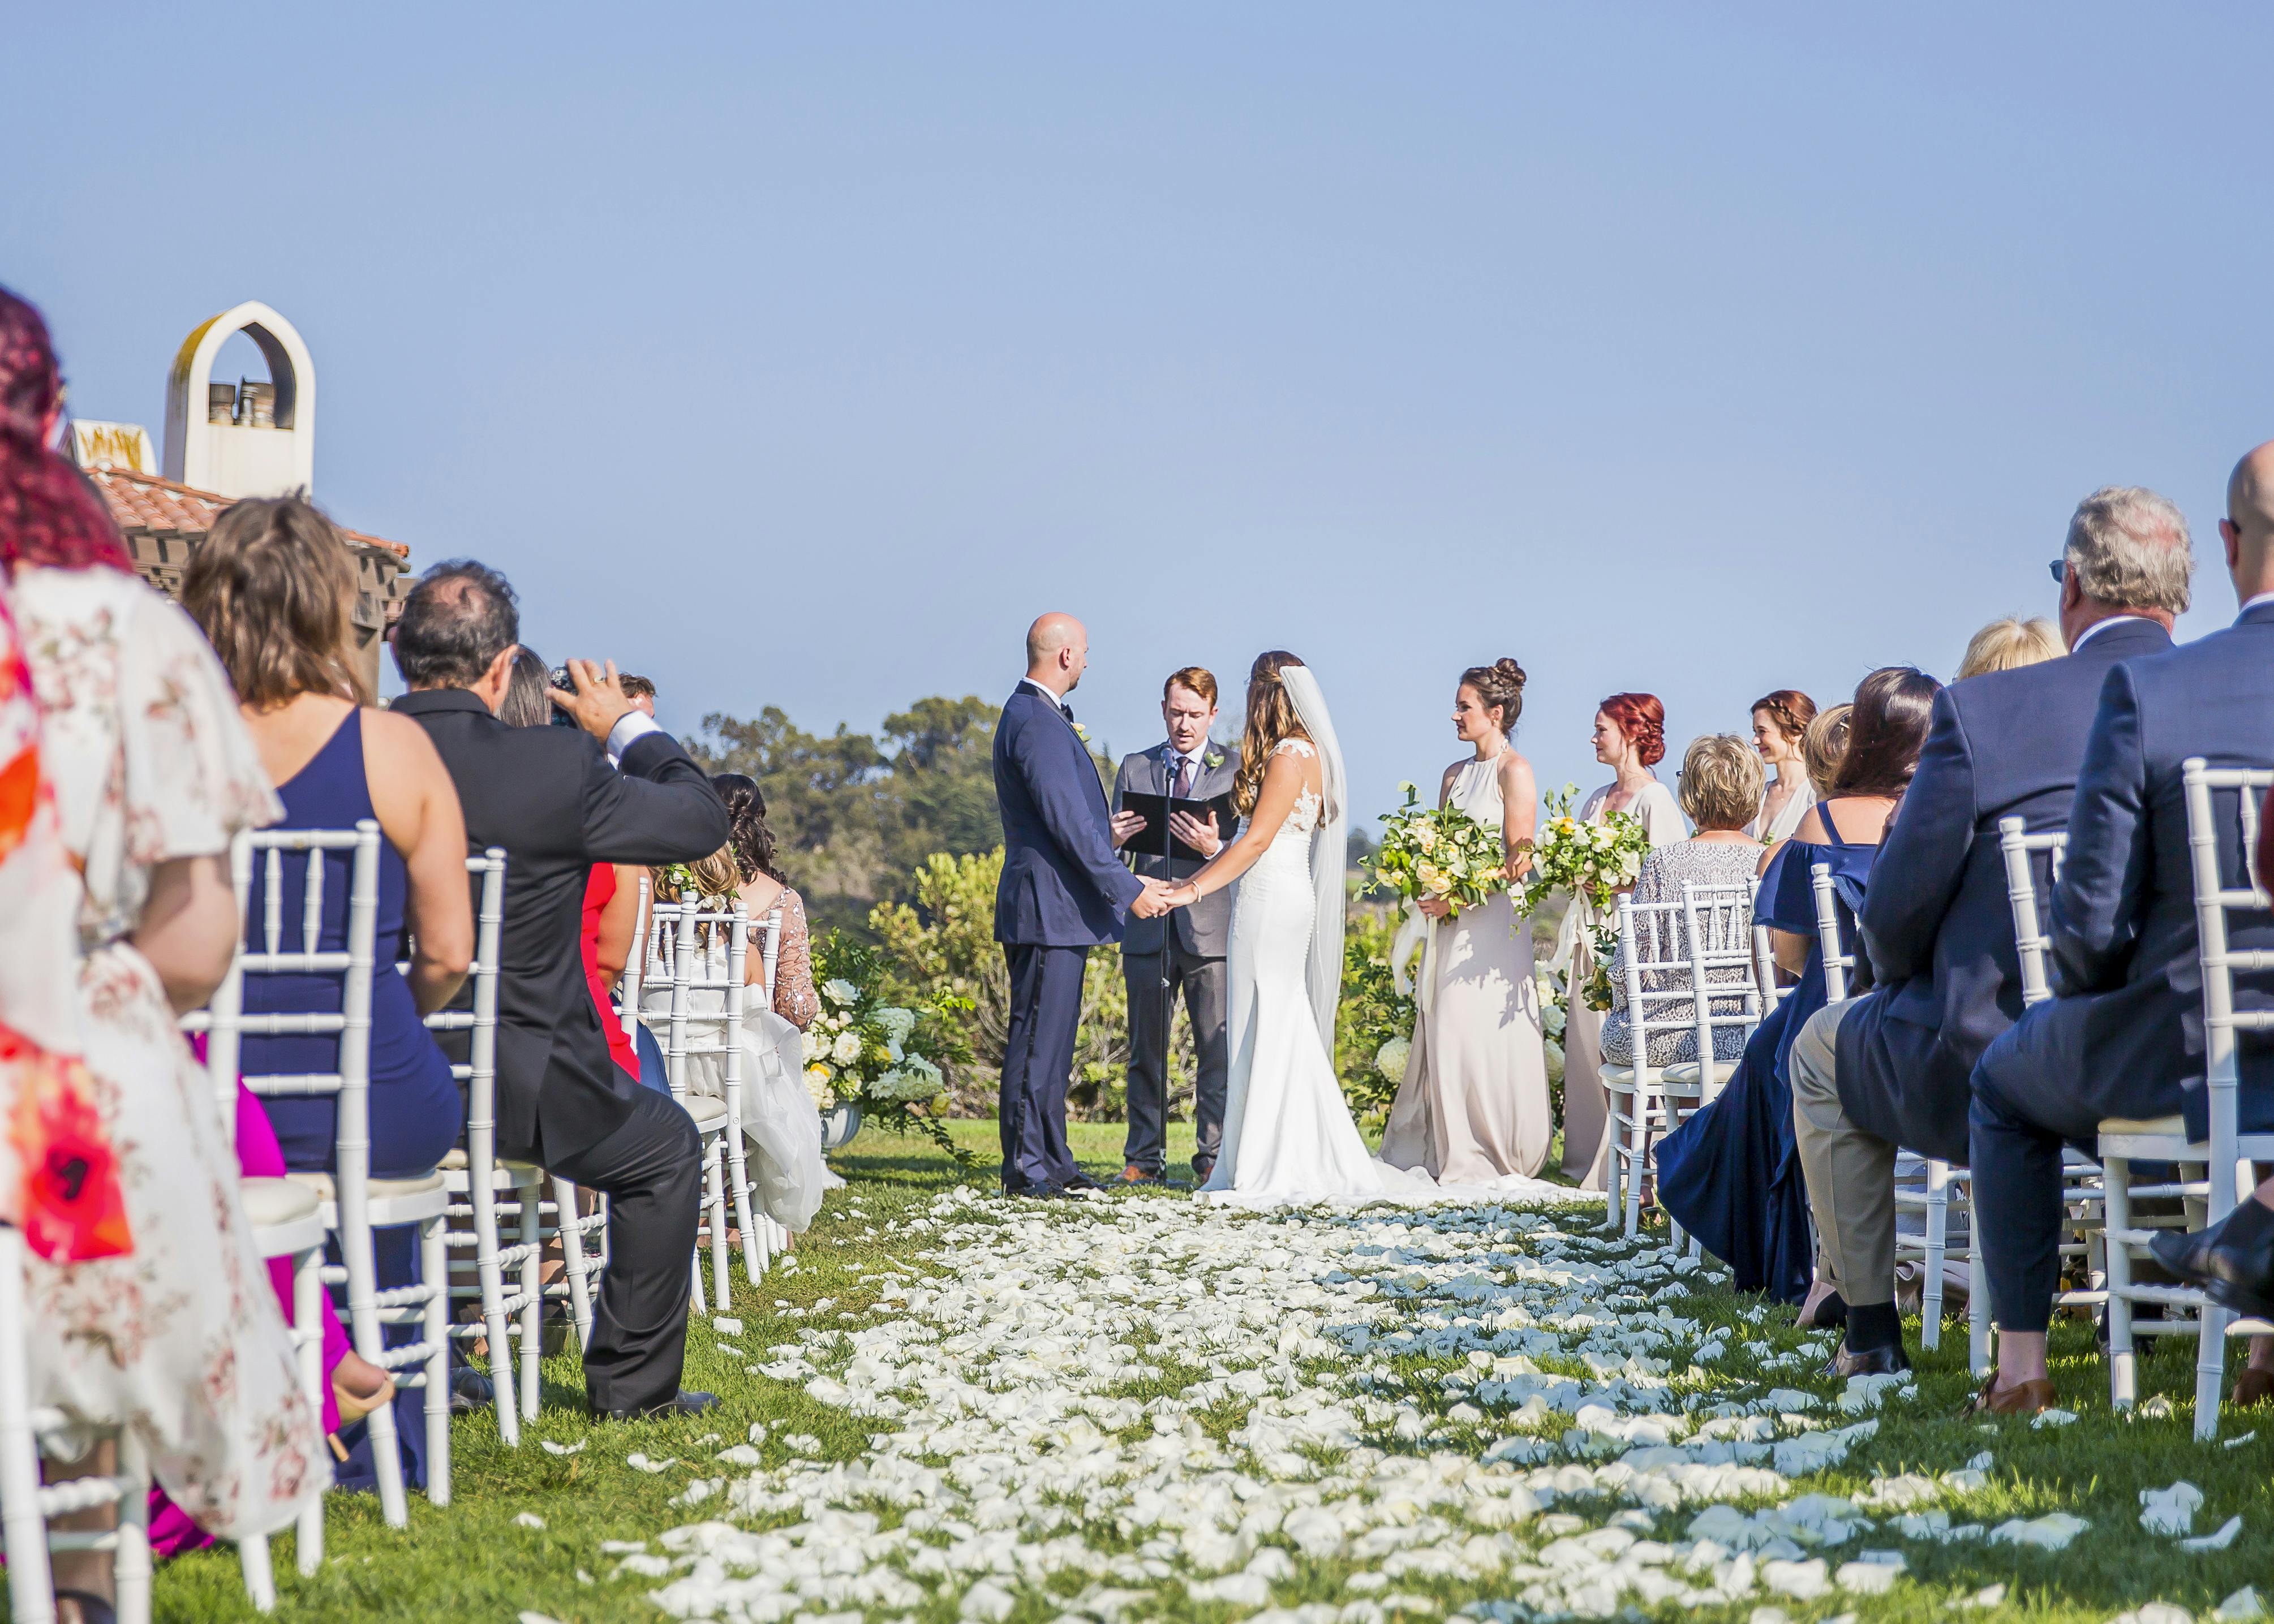 Romantic Oceanview Wedding at The Ritz-Carlton Bacara, Santa Barbara in Santa Barbara, CA With Petals for Wedding Aisle | PartySlate